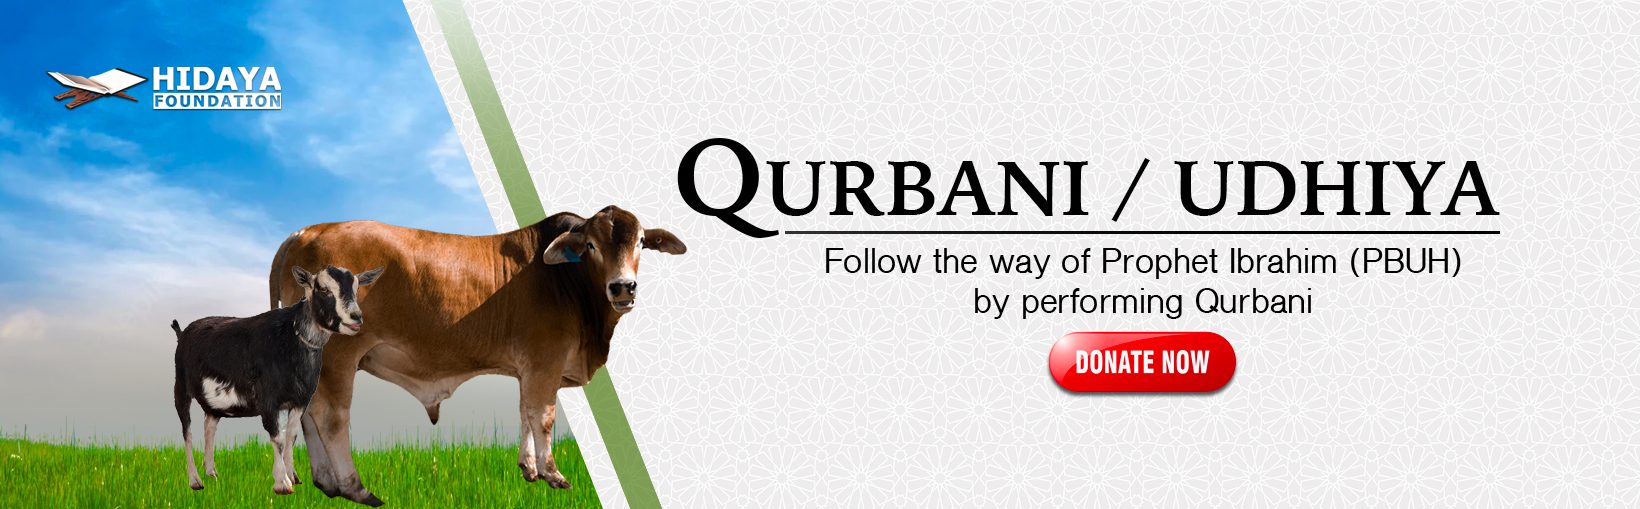 Hidaya Foundation performs Qurbani on behalf of donors during Eid